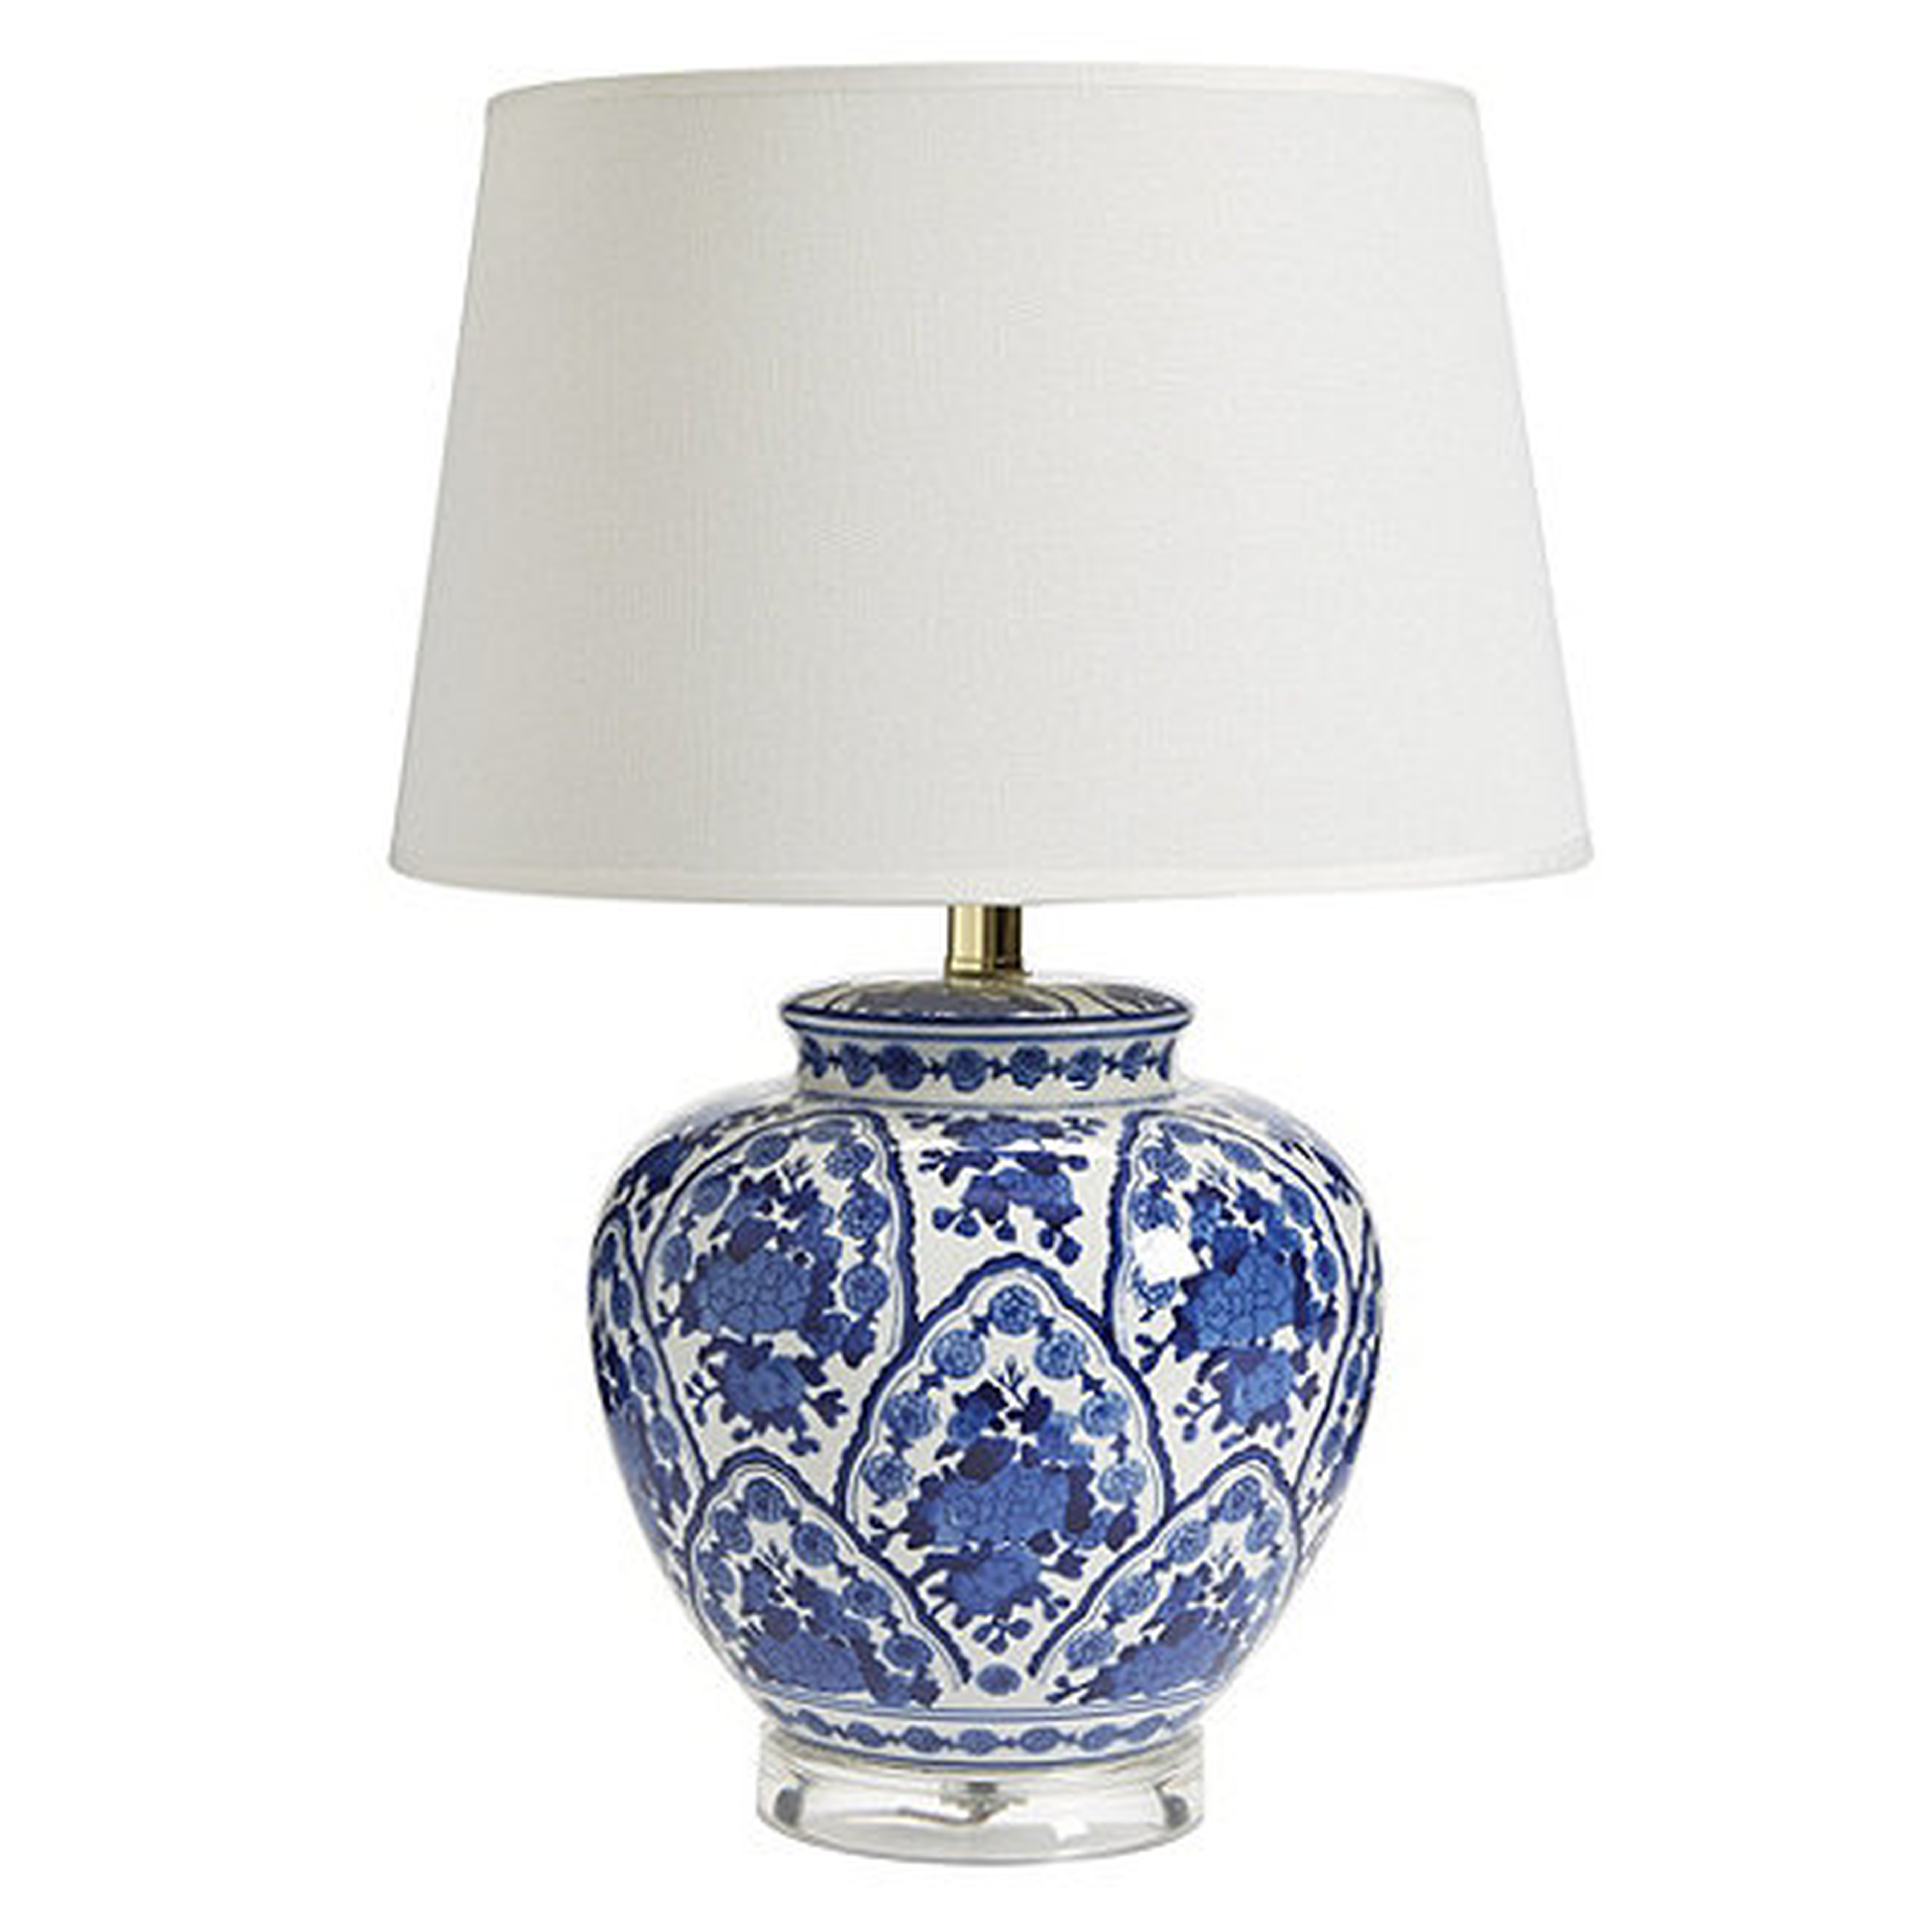 Blue & White Round Table Lamp - Ballard Designs